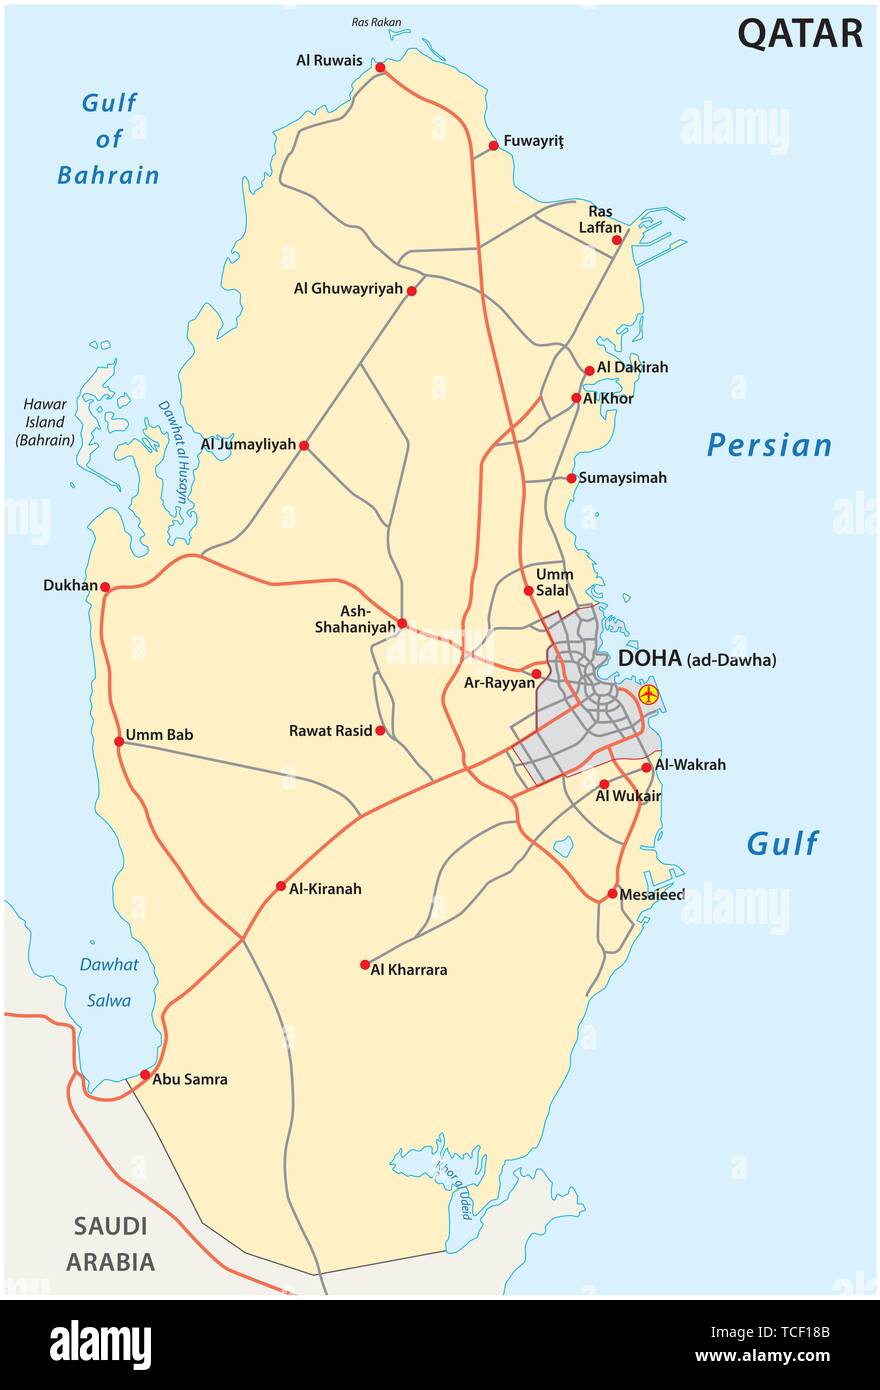 Fahrplan der Staaten in Katar. Stock Vektor